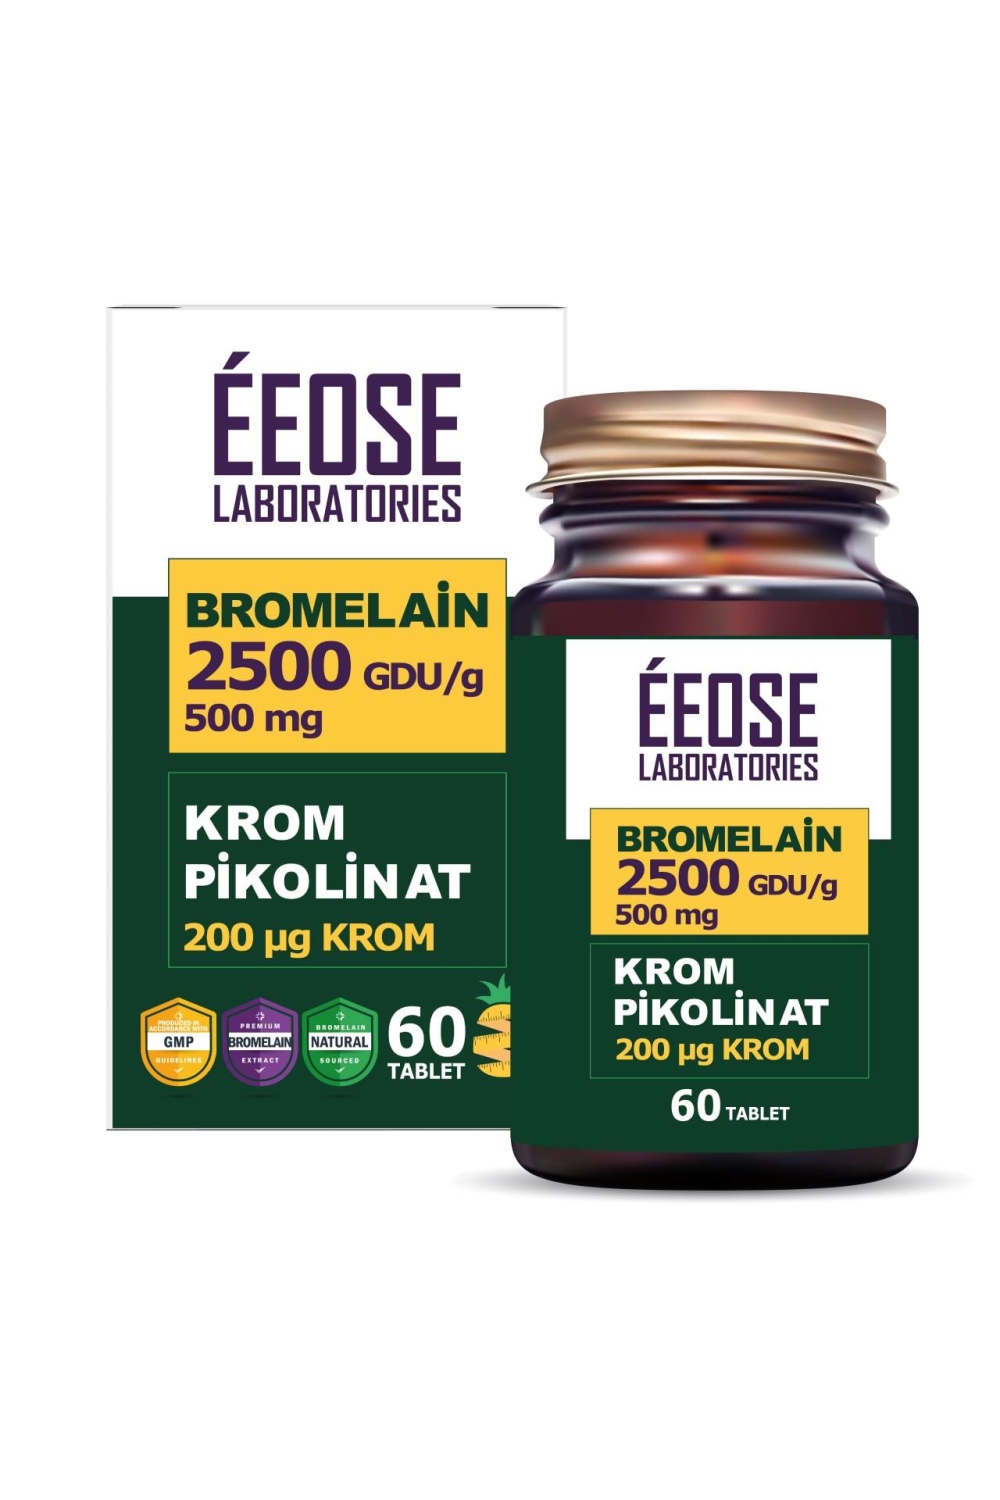 Eeose Bromelain Krom Pikolinat 60 Tablet - 1